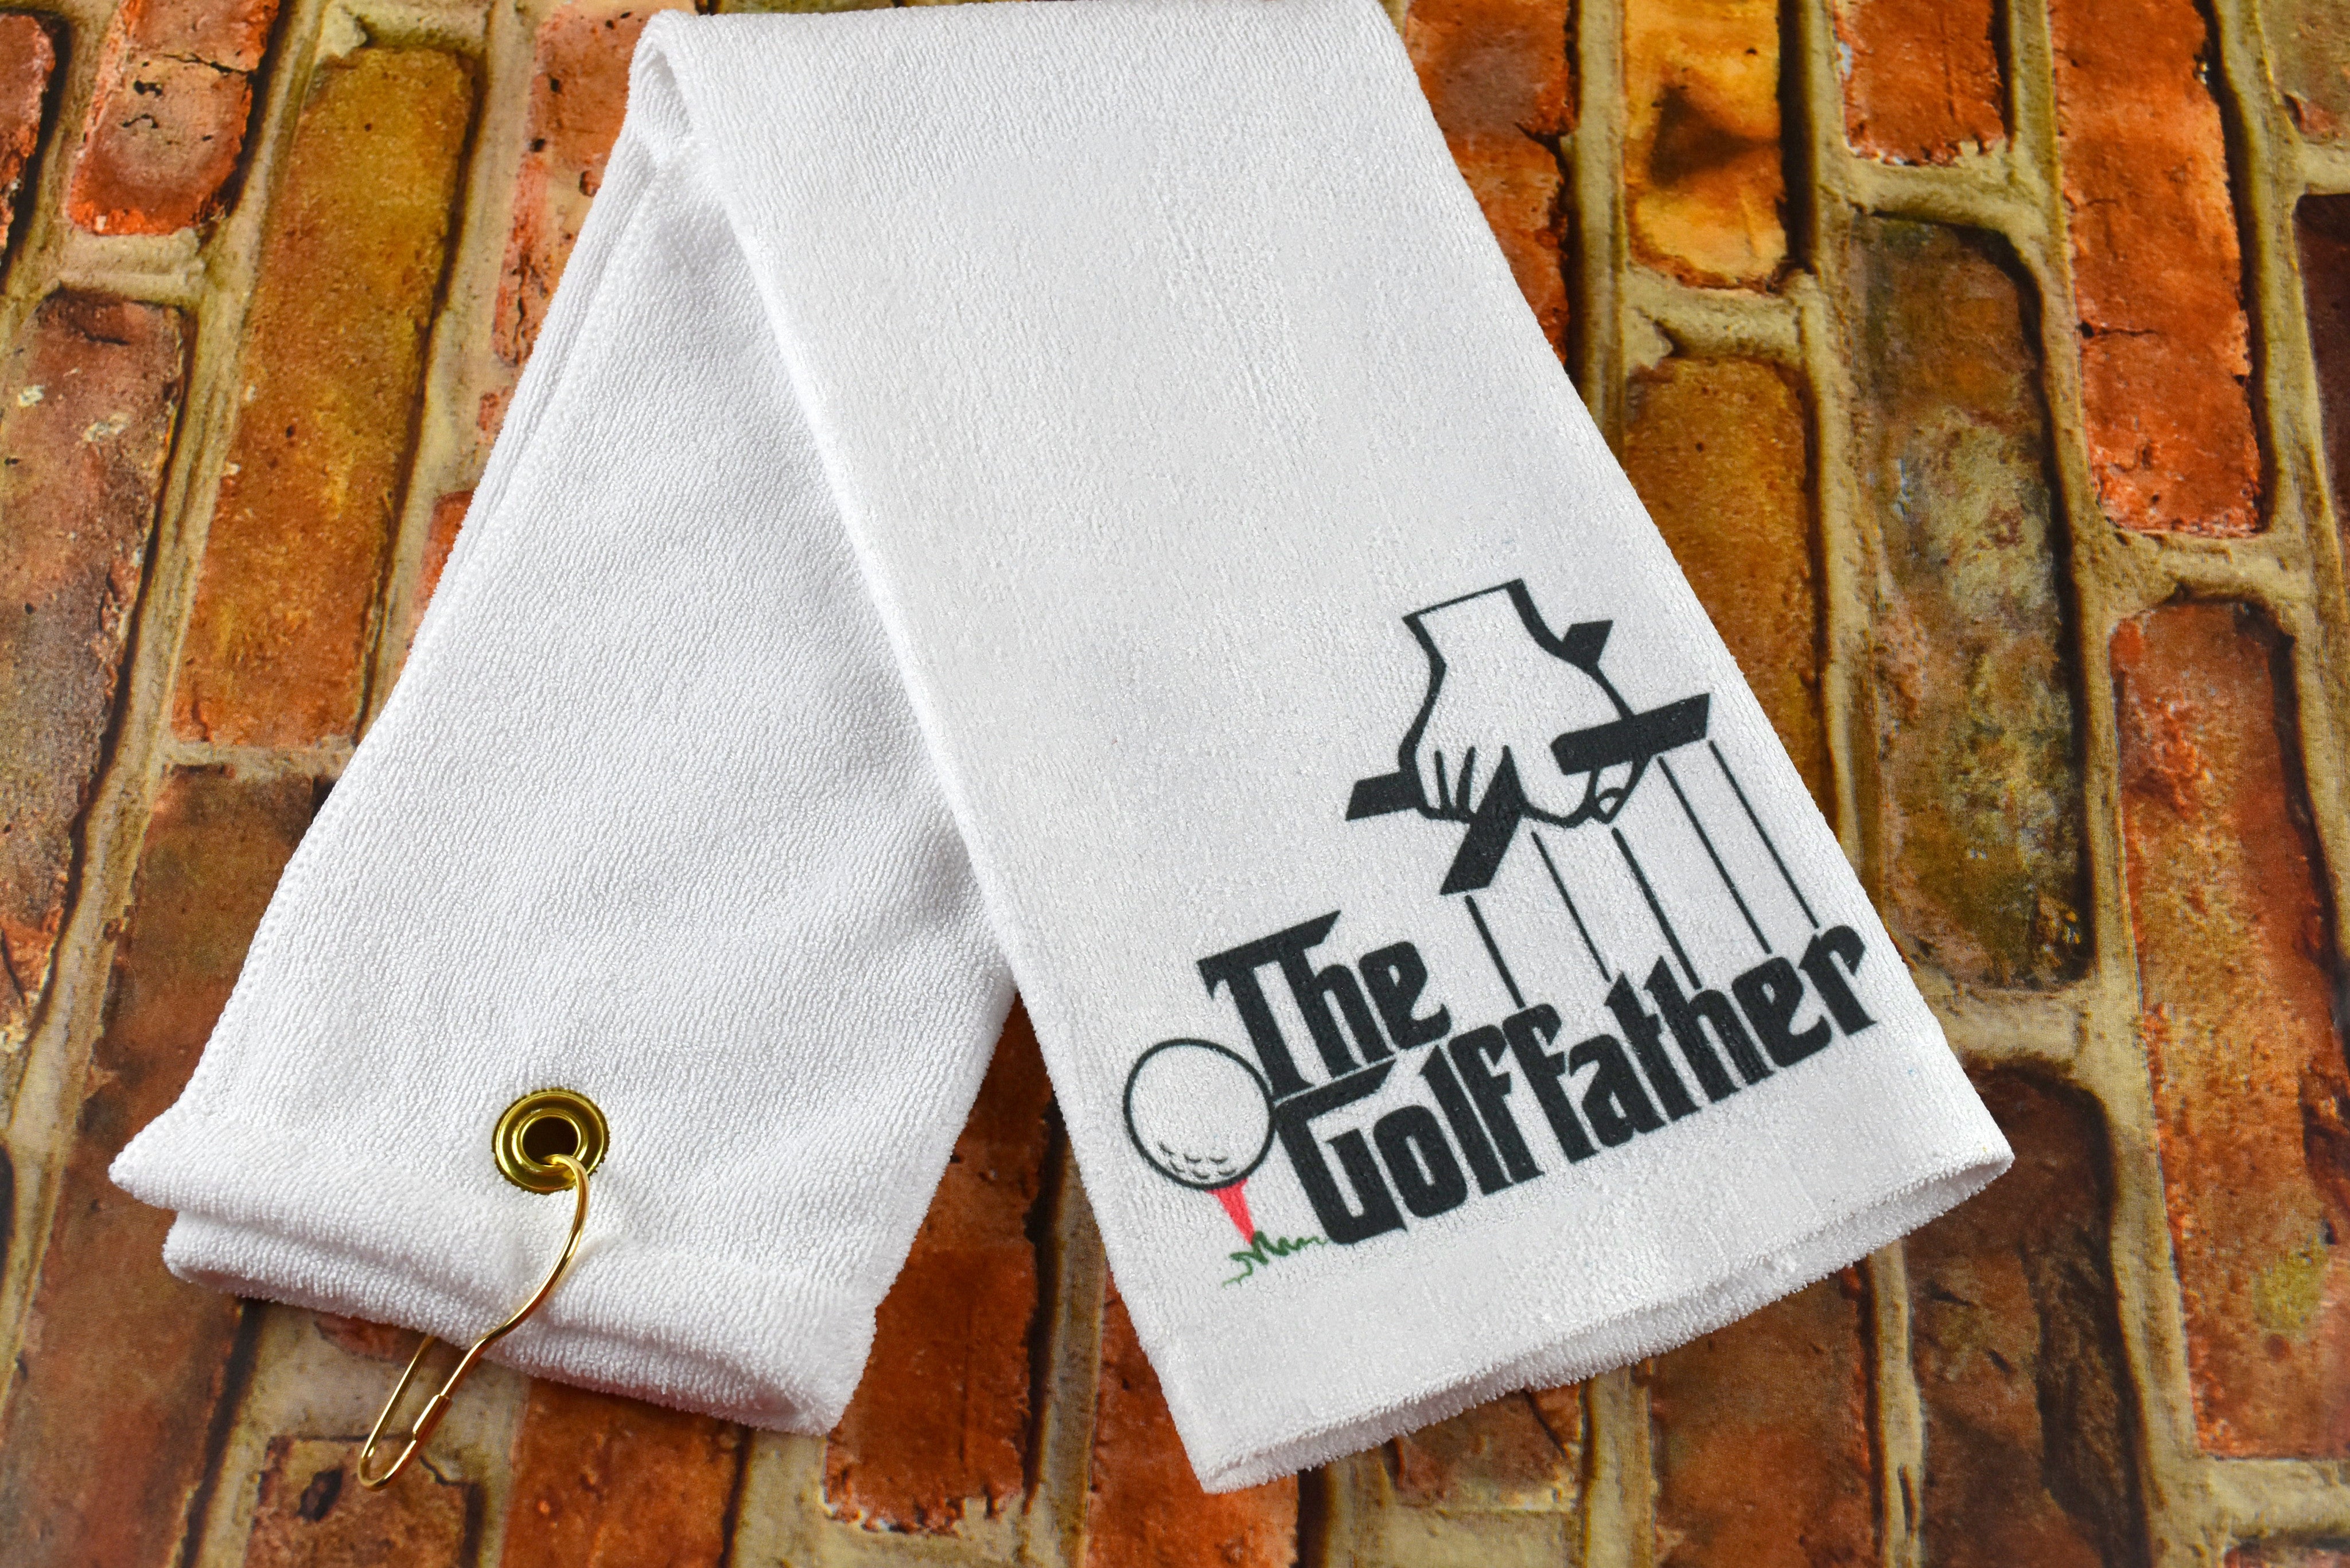 Personalized Golf Towel - Monogrammed Golf Towel